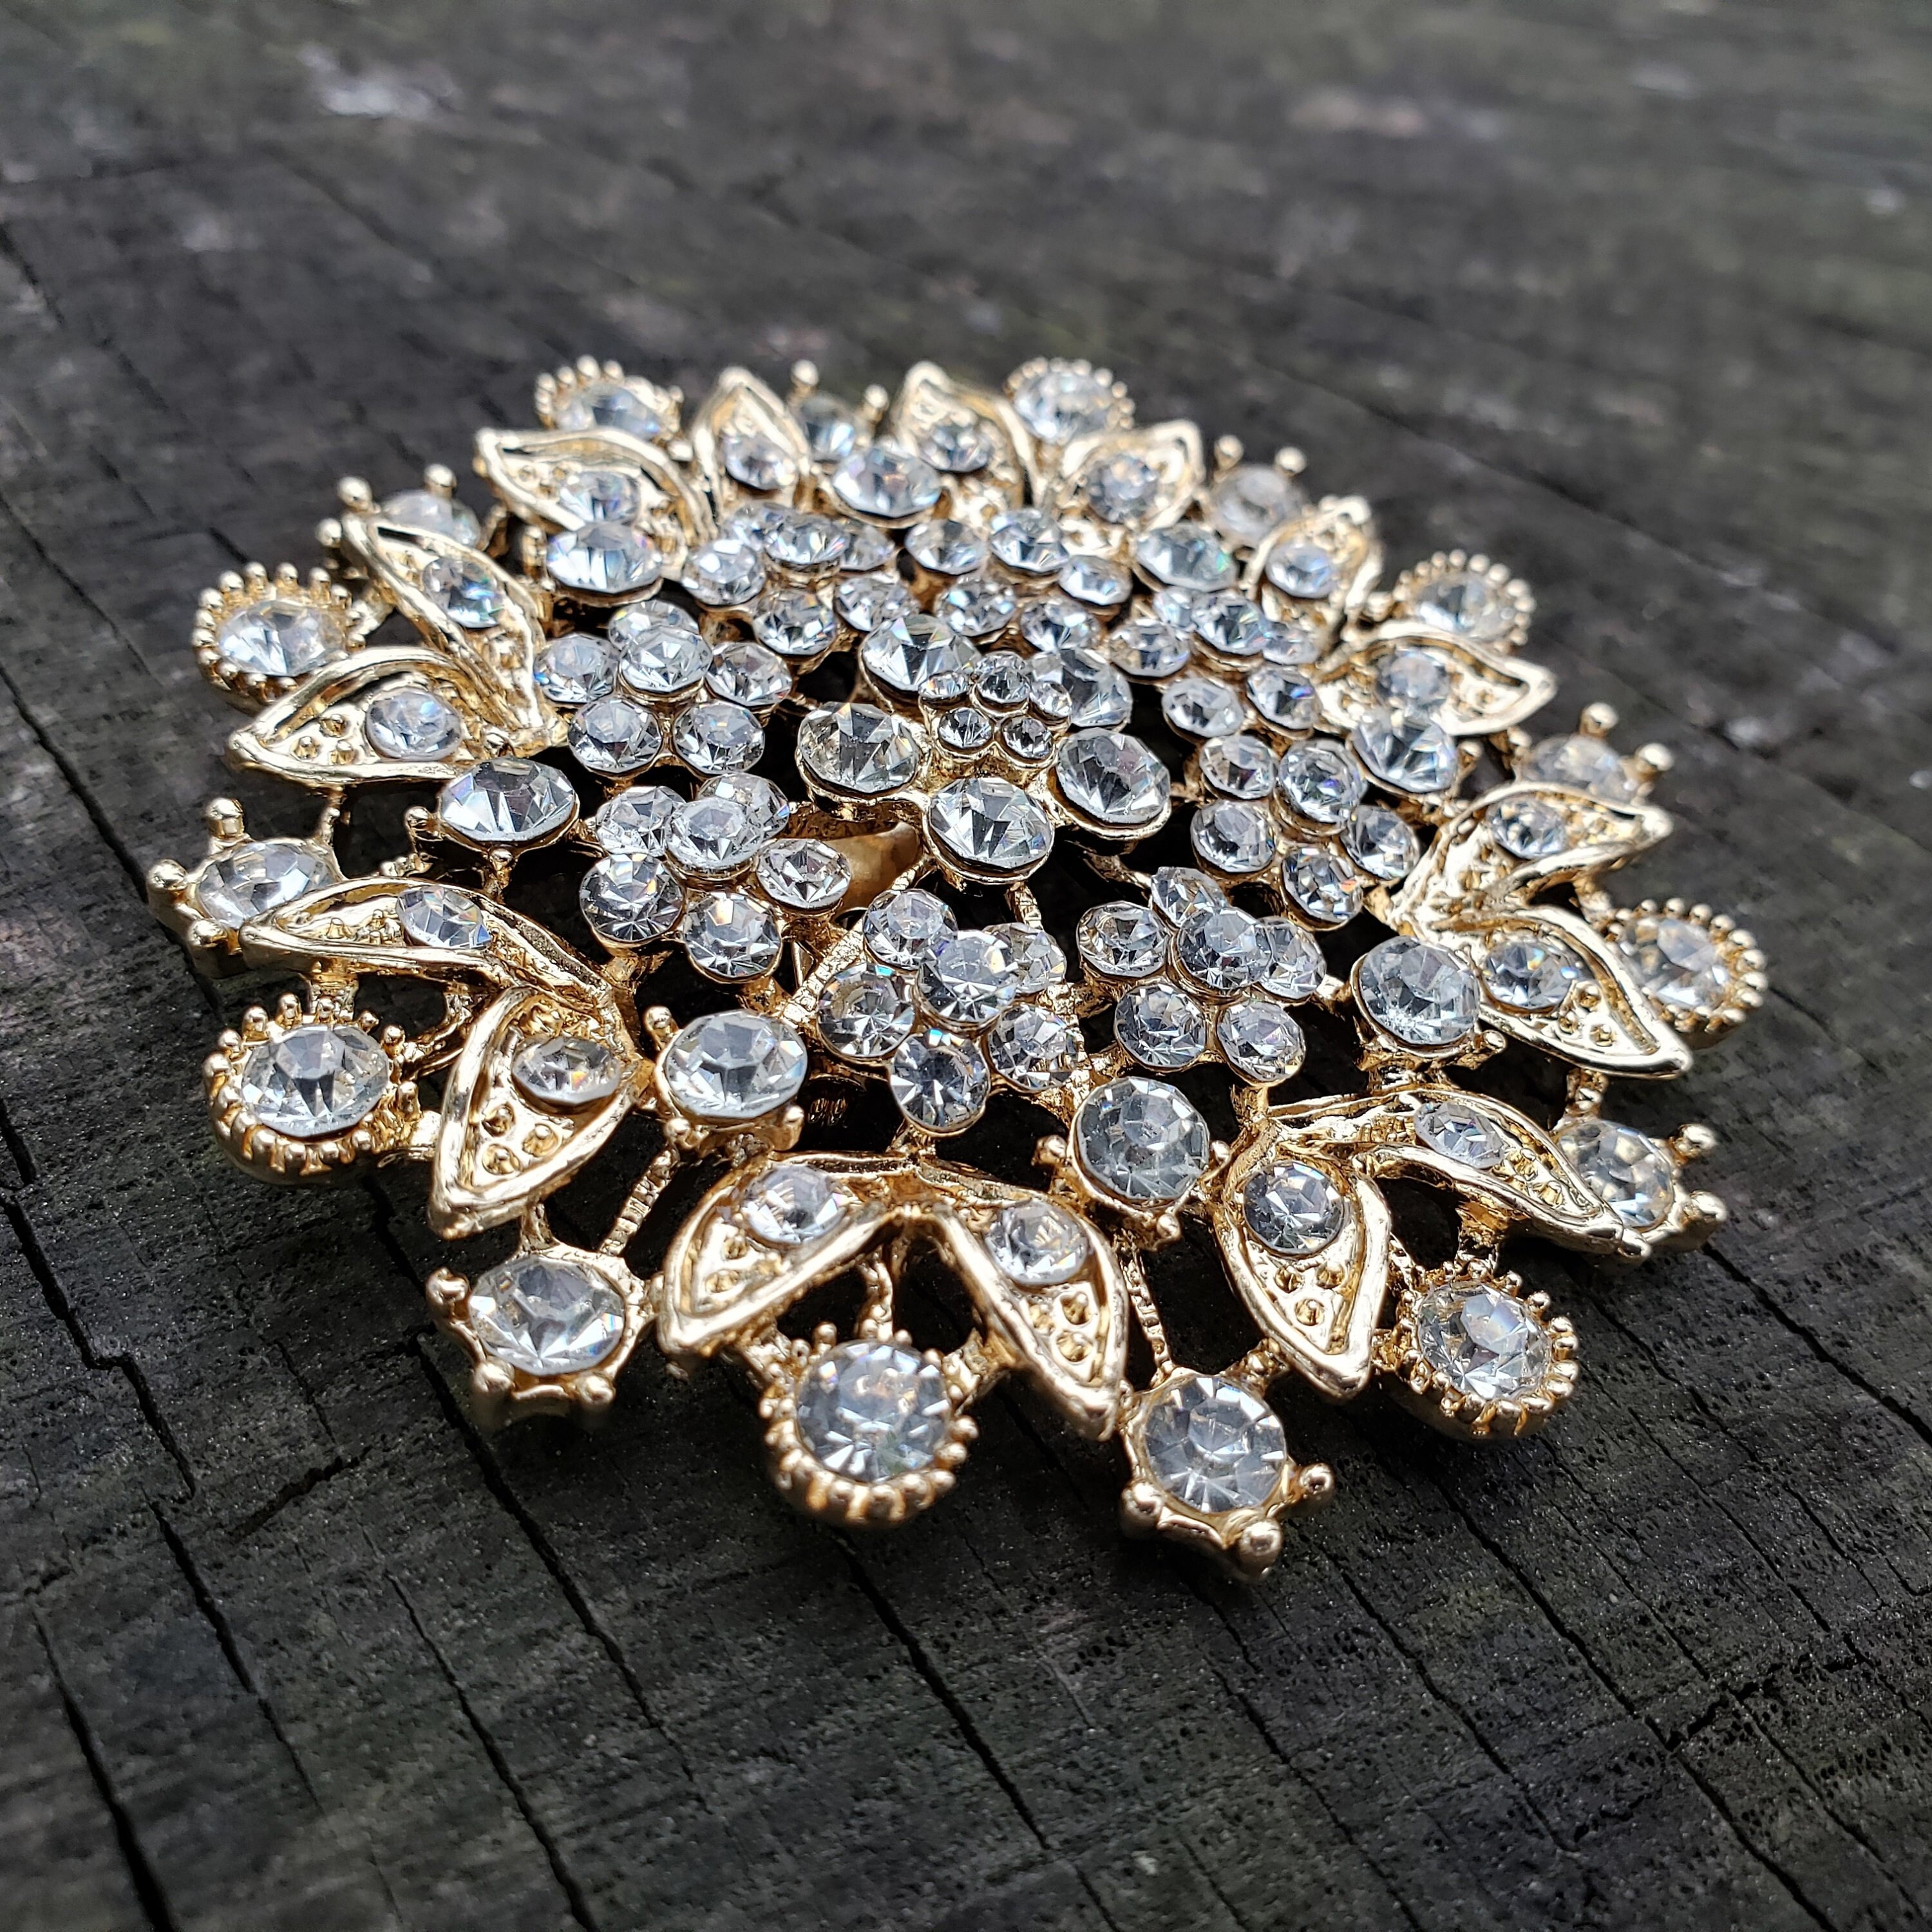 1 1/4 Gold Round Rhinestone Fashion Brooch Pin - Pack of 12 (BHB038) - CB  Flowers & Crafts